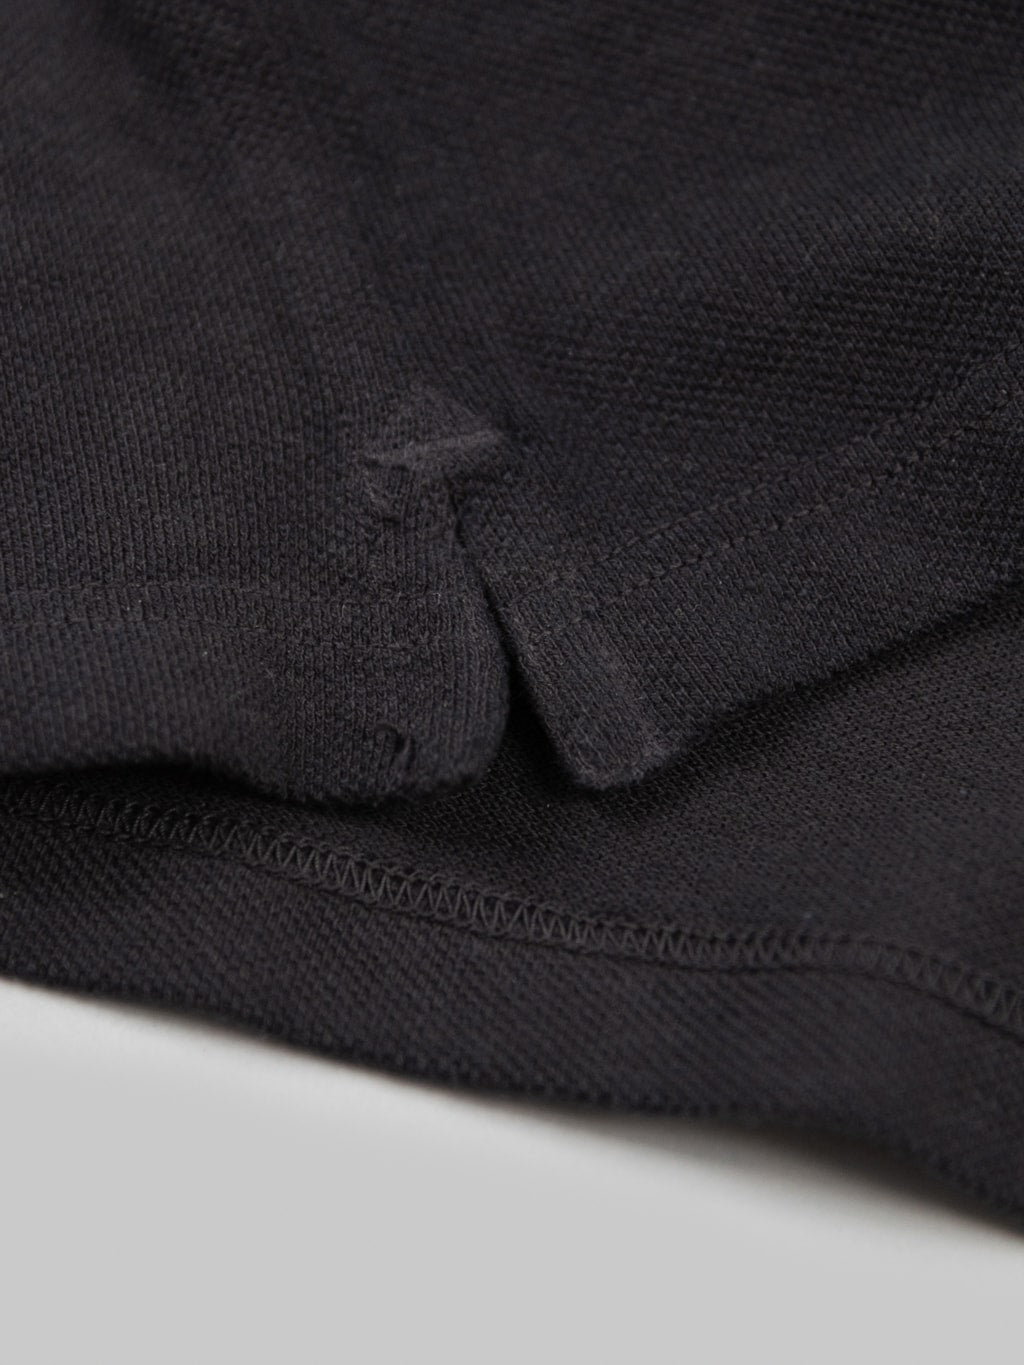 ues polo shirt black 100 cotton fabric